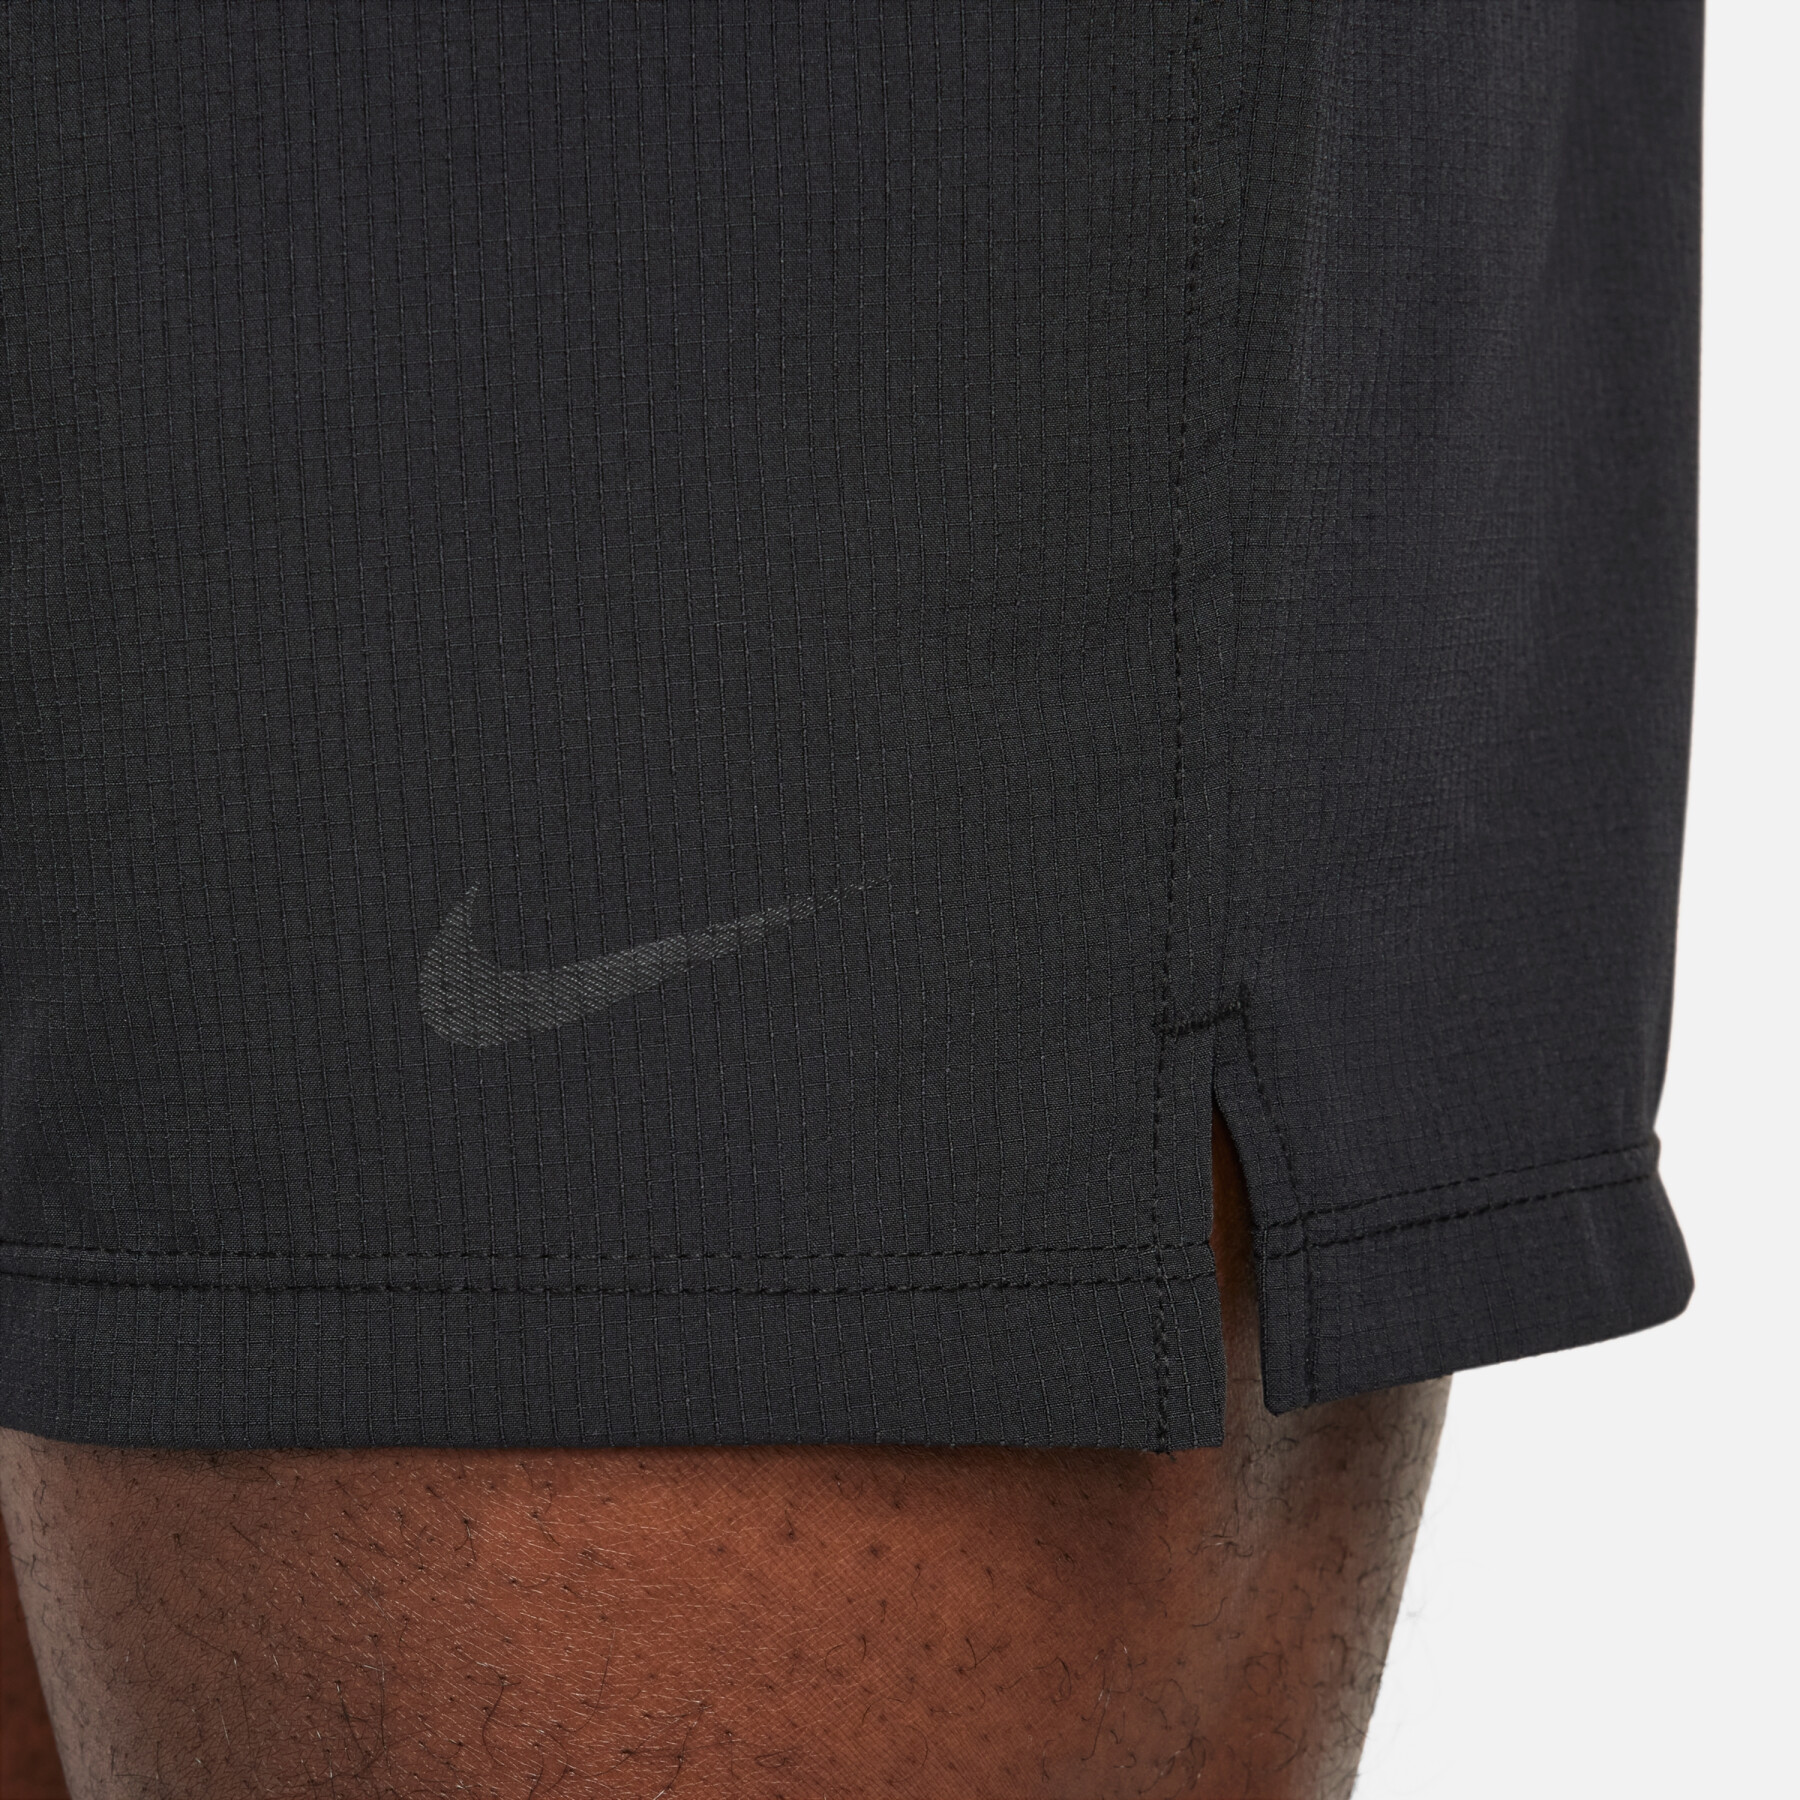 Ungefütterte Shorts Kind Nike Flex Rep Dri-FIT 13 cm